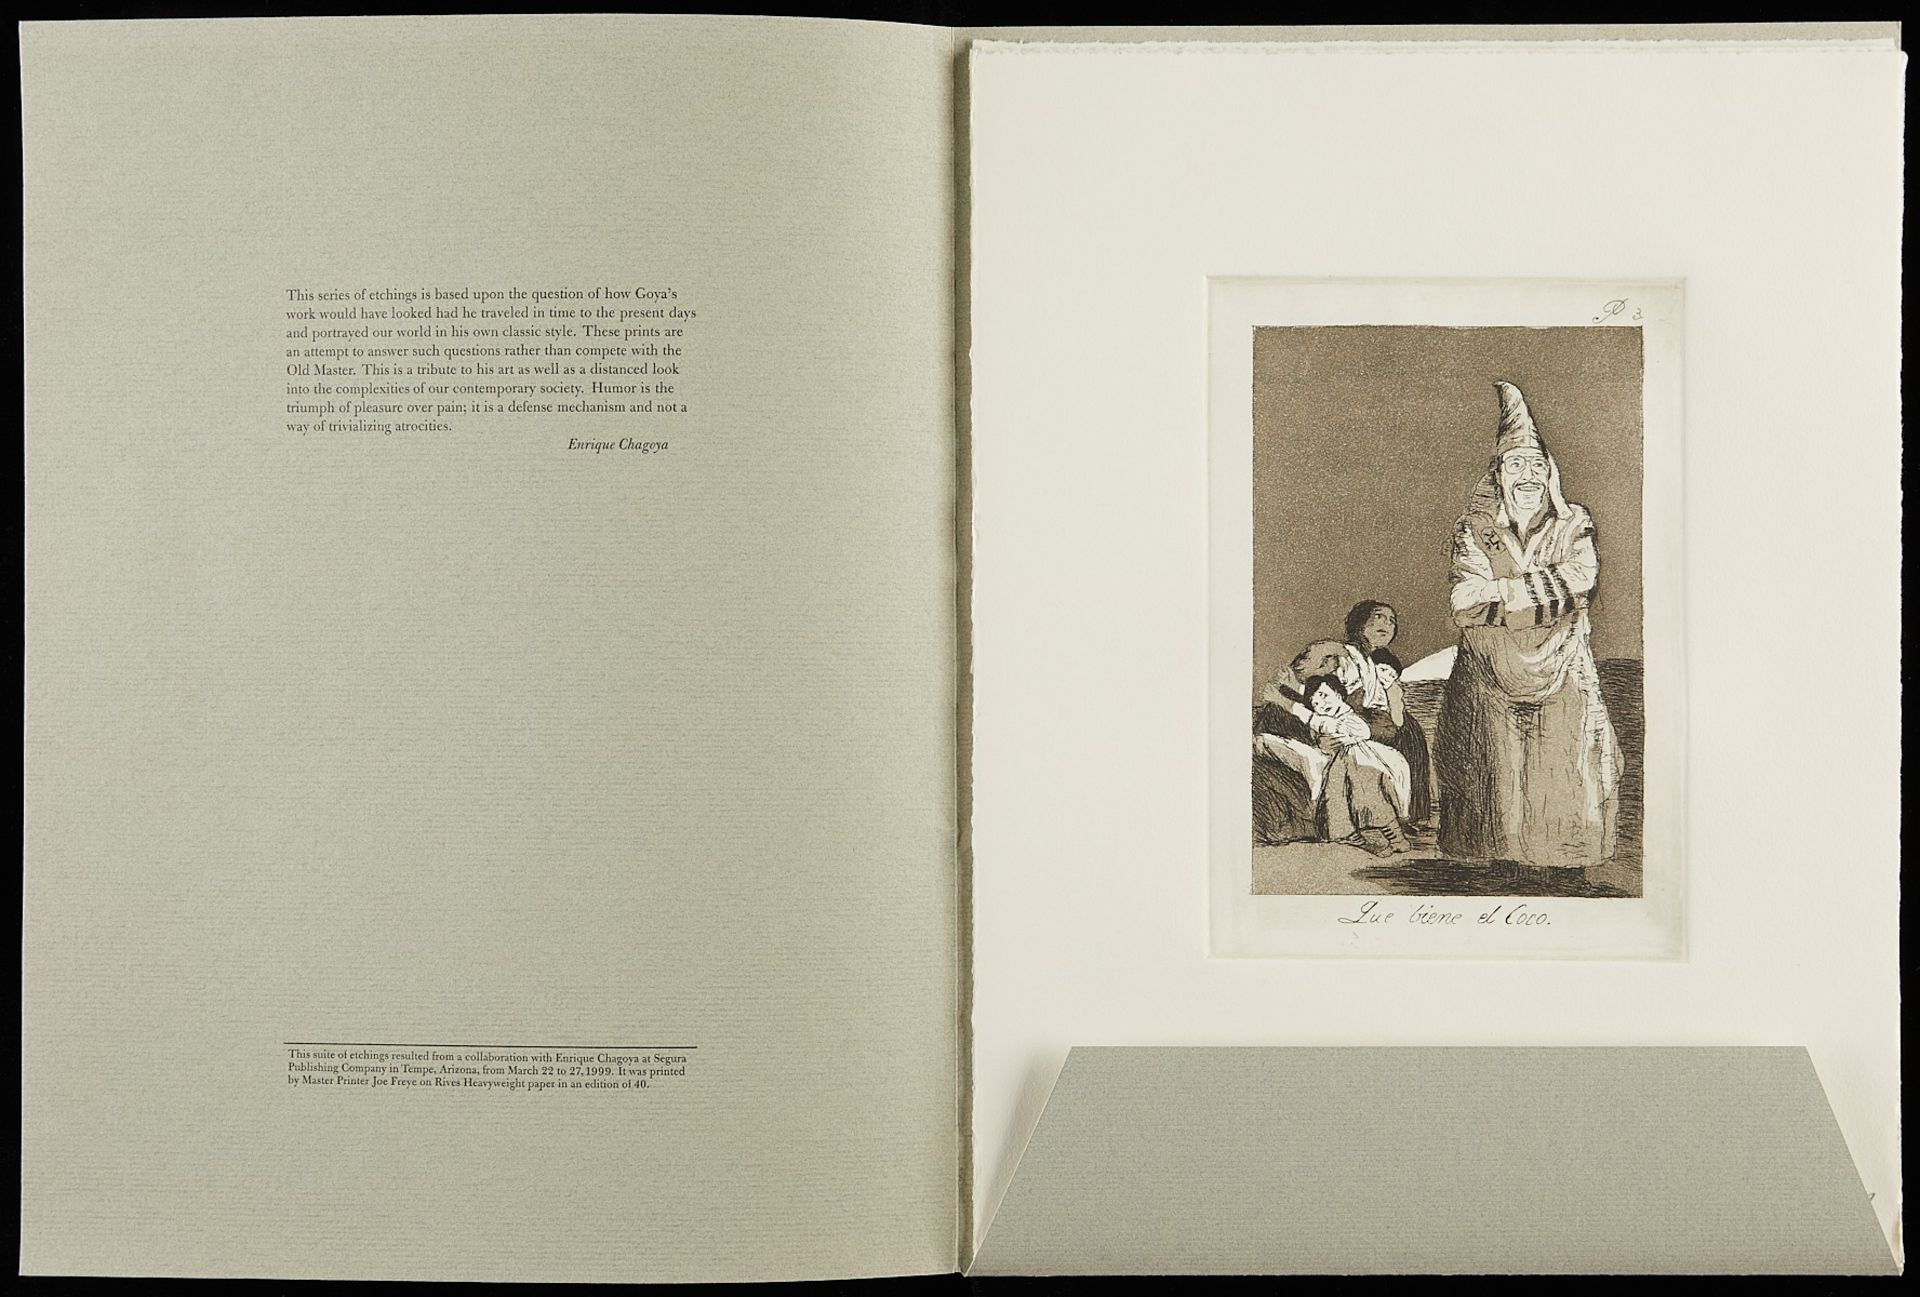 Grp: 8 Chagoya "Return To Goya's Caprichos" Suite - Image 40 of 40